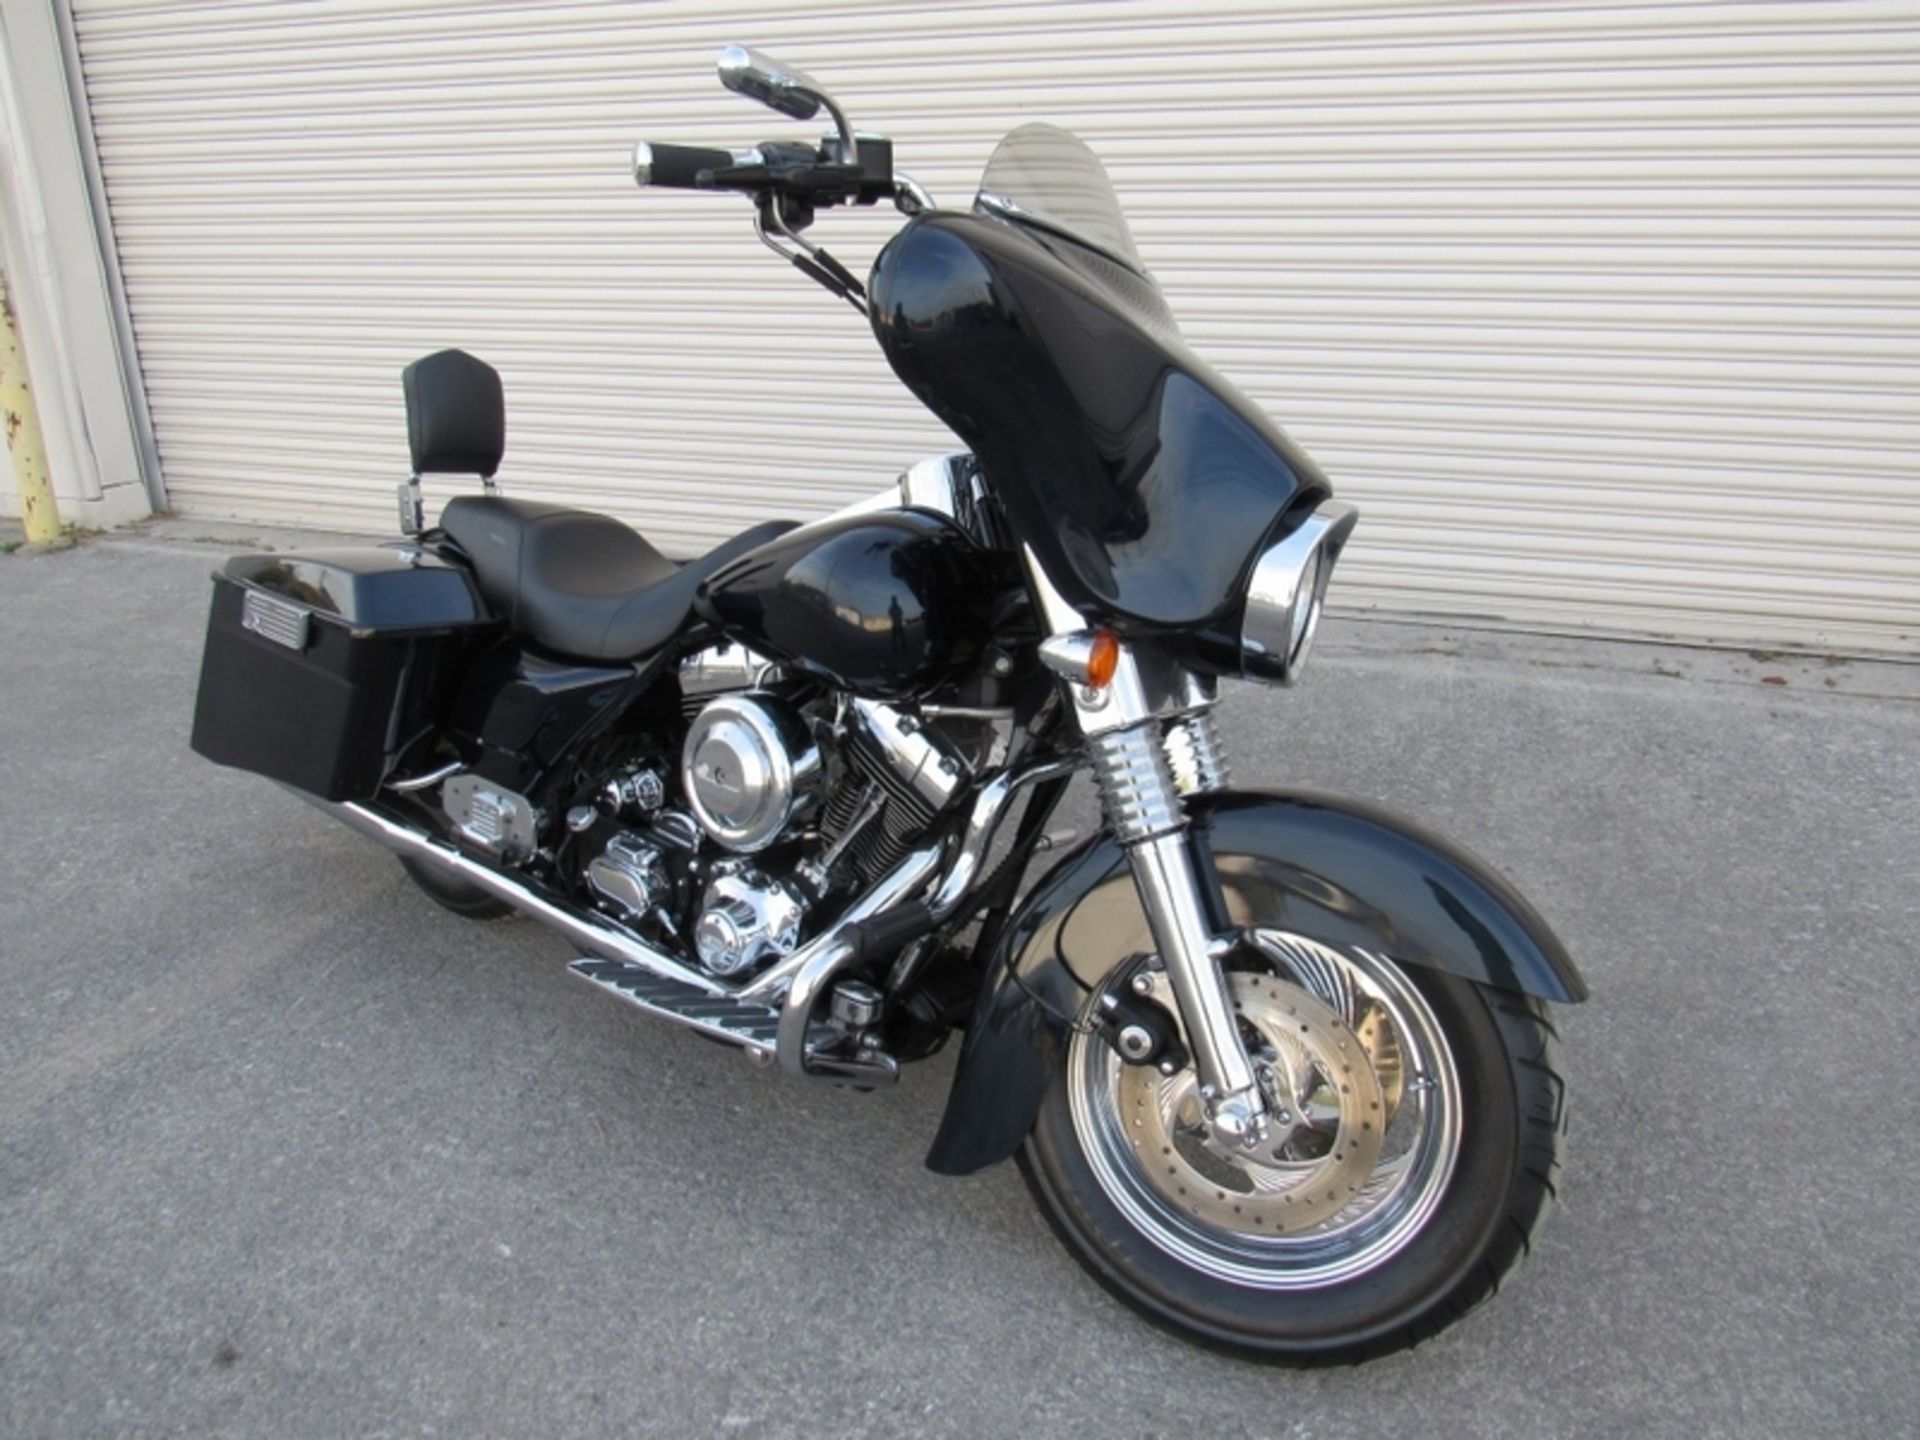 1999 Harley Davidson FLHTCUI Ultra Classic Location: Chattanooga TN Year: 1999 Make: Harley Davidson